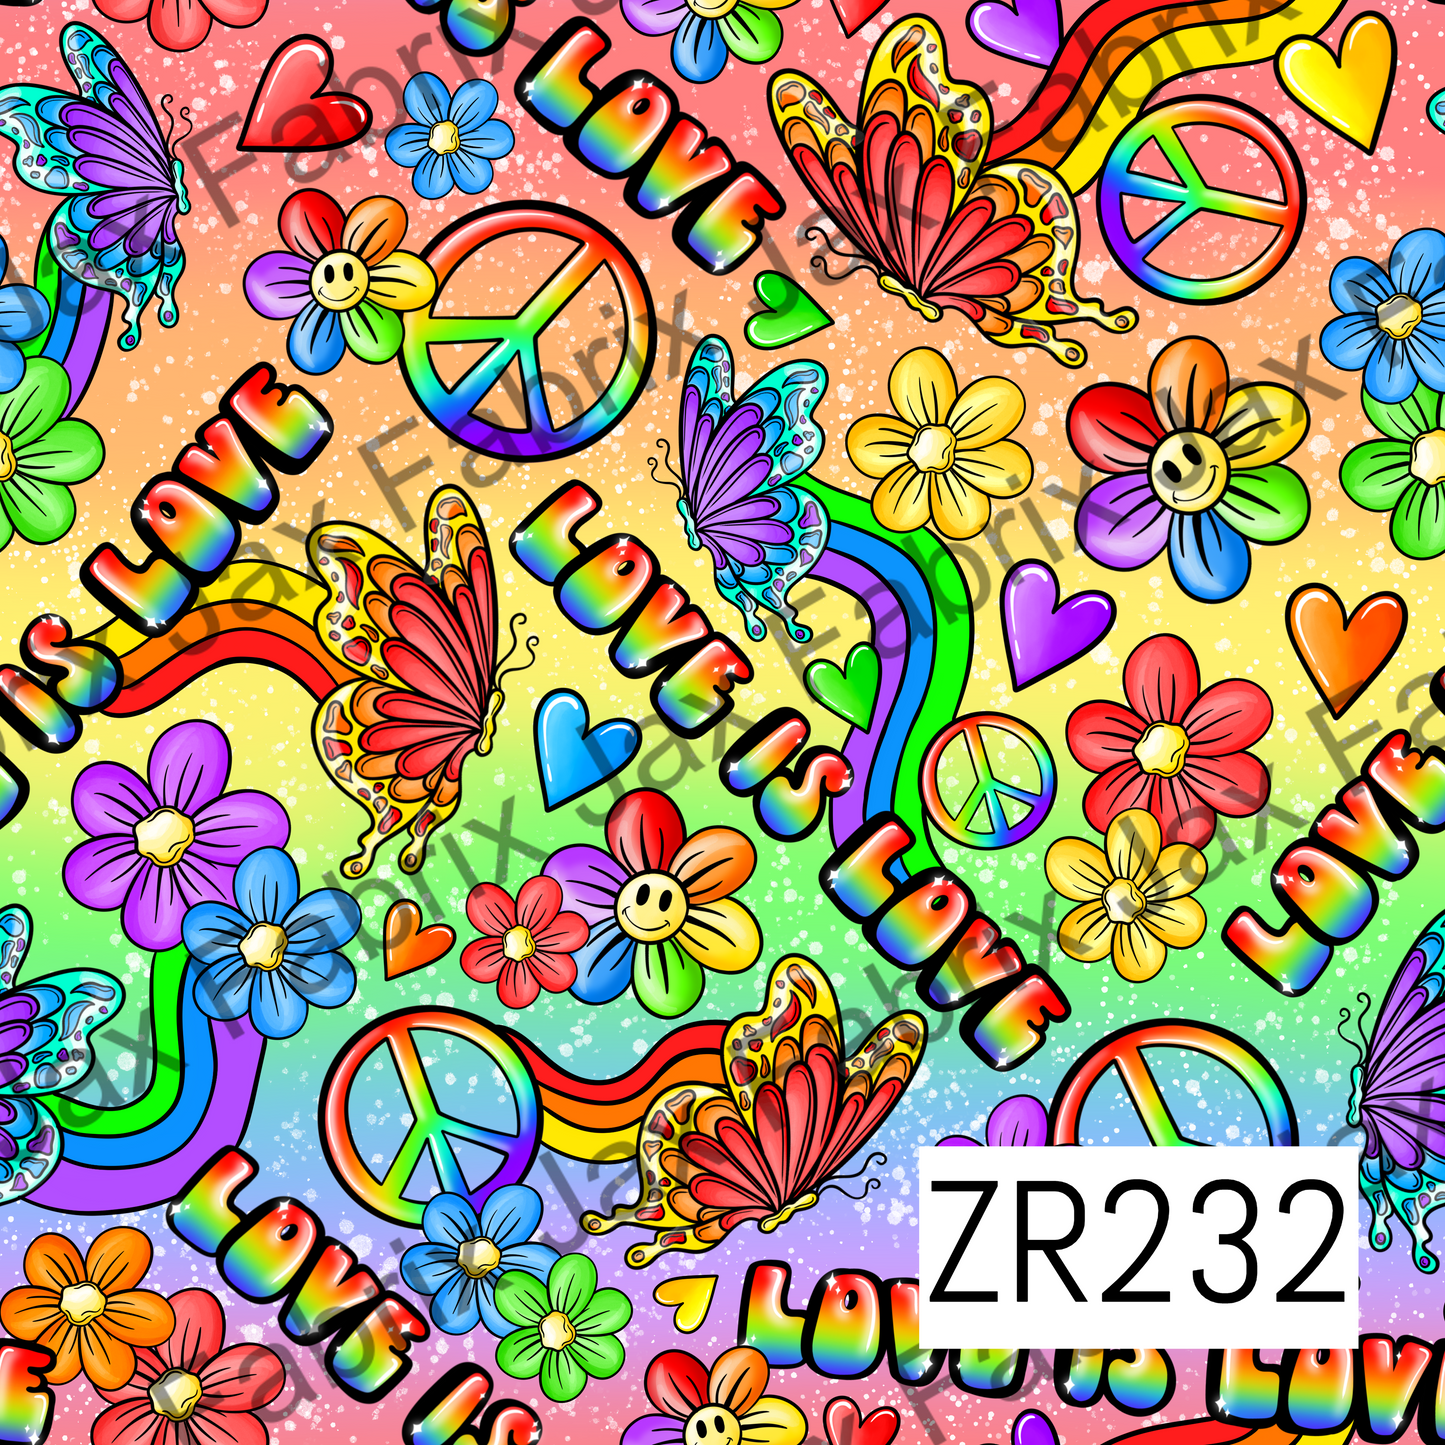 Rainbow Gradient Love is Love ZR232